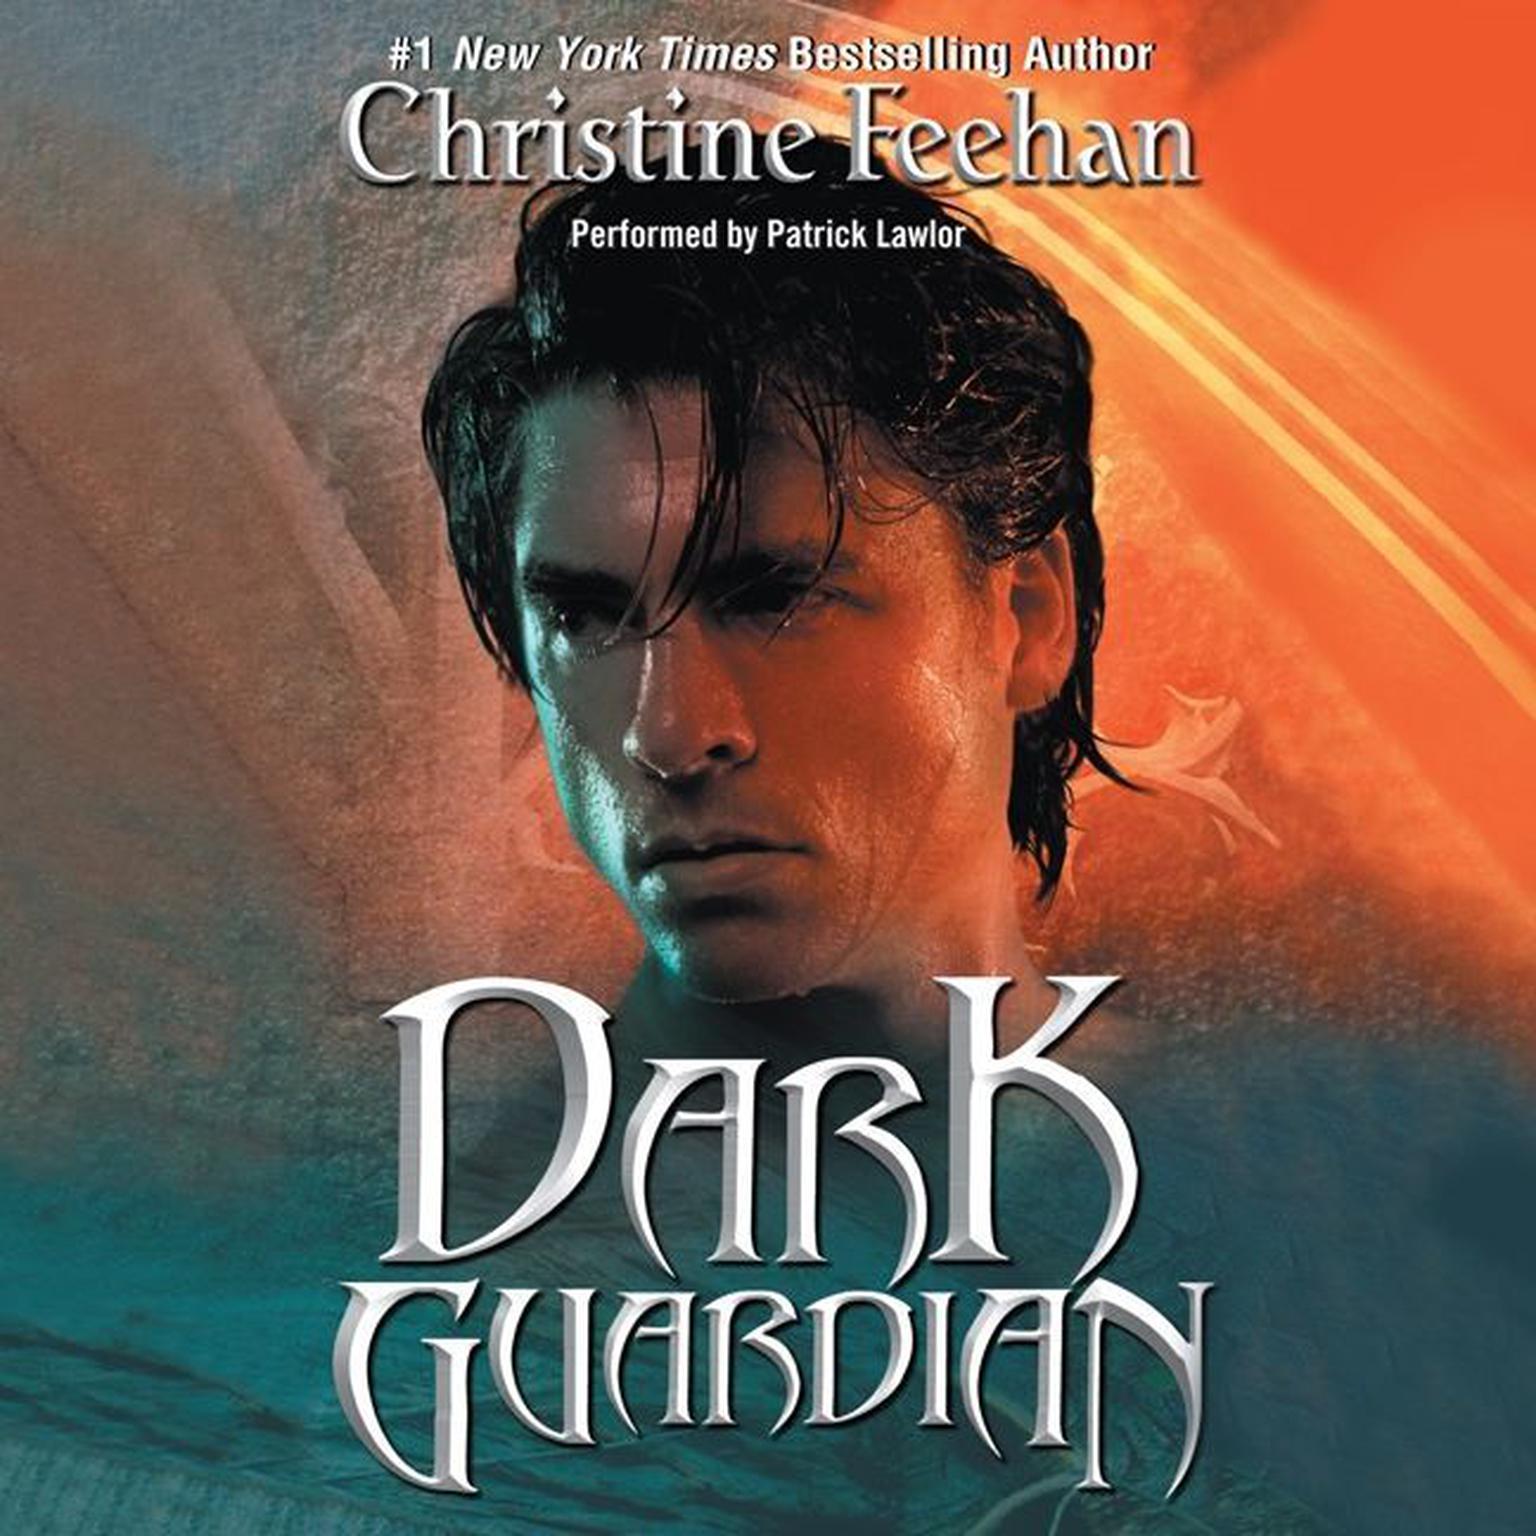 Dark Guardian Audiobook, by Christine Feehan